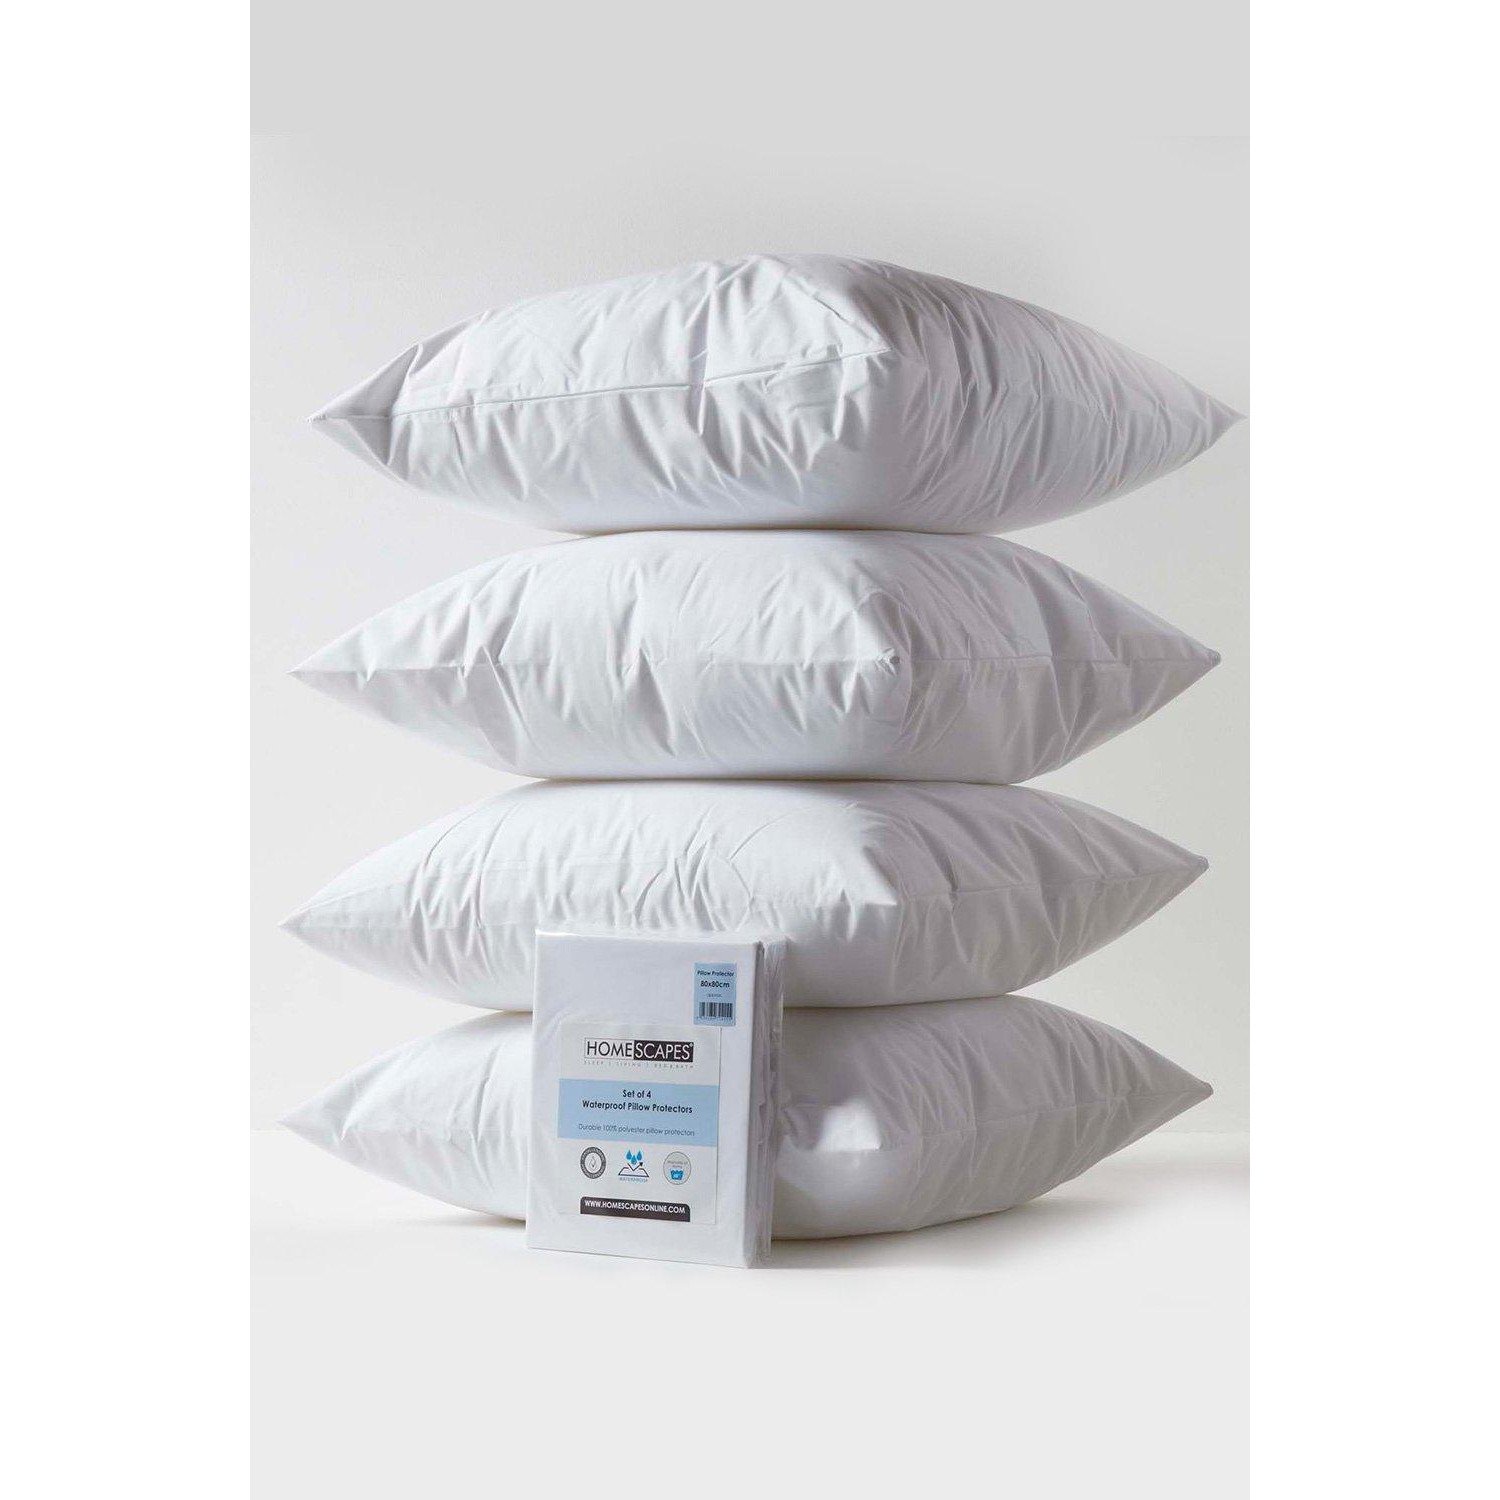 Waterproof Pillow Protectors 80 x 80 cm, Pack of 4 - image 1